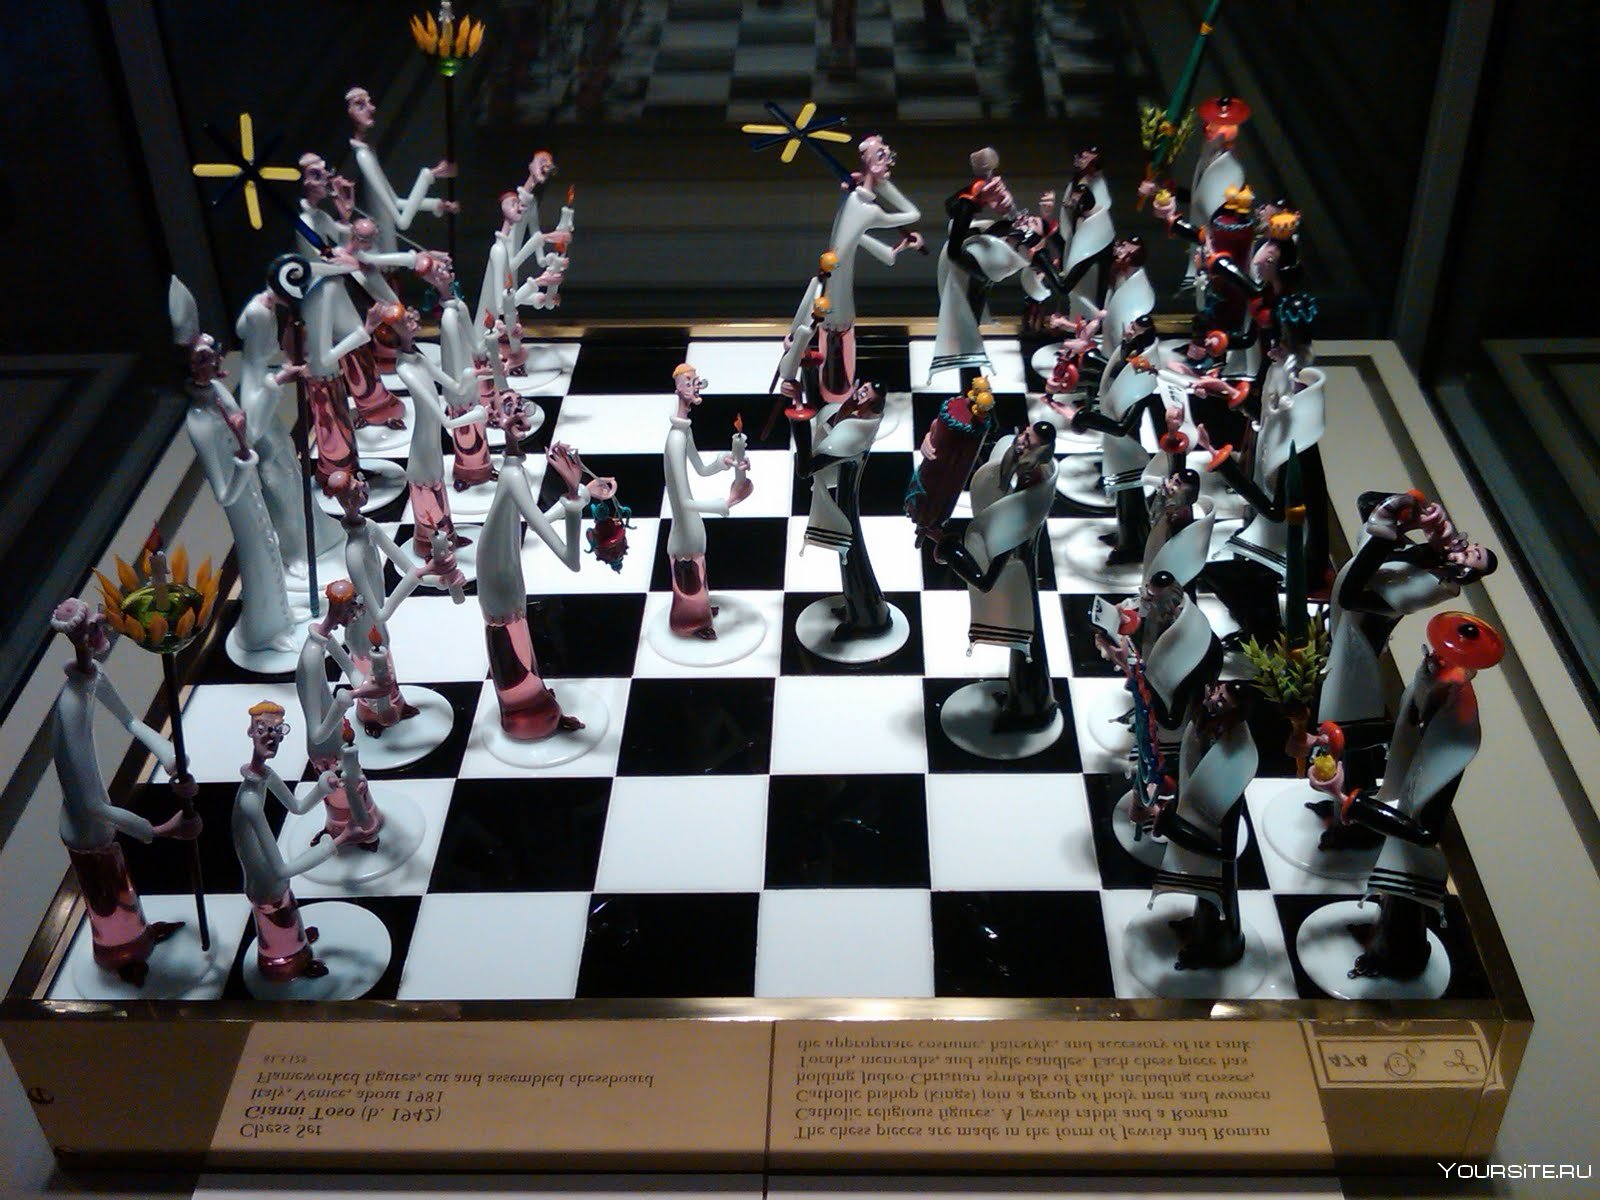 Шахматы со всеми живыми игроками. Шахматы DMC 3. Анджело Джудиче шахматы. Паоло бои шахматы. Демонические шахматы.